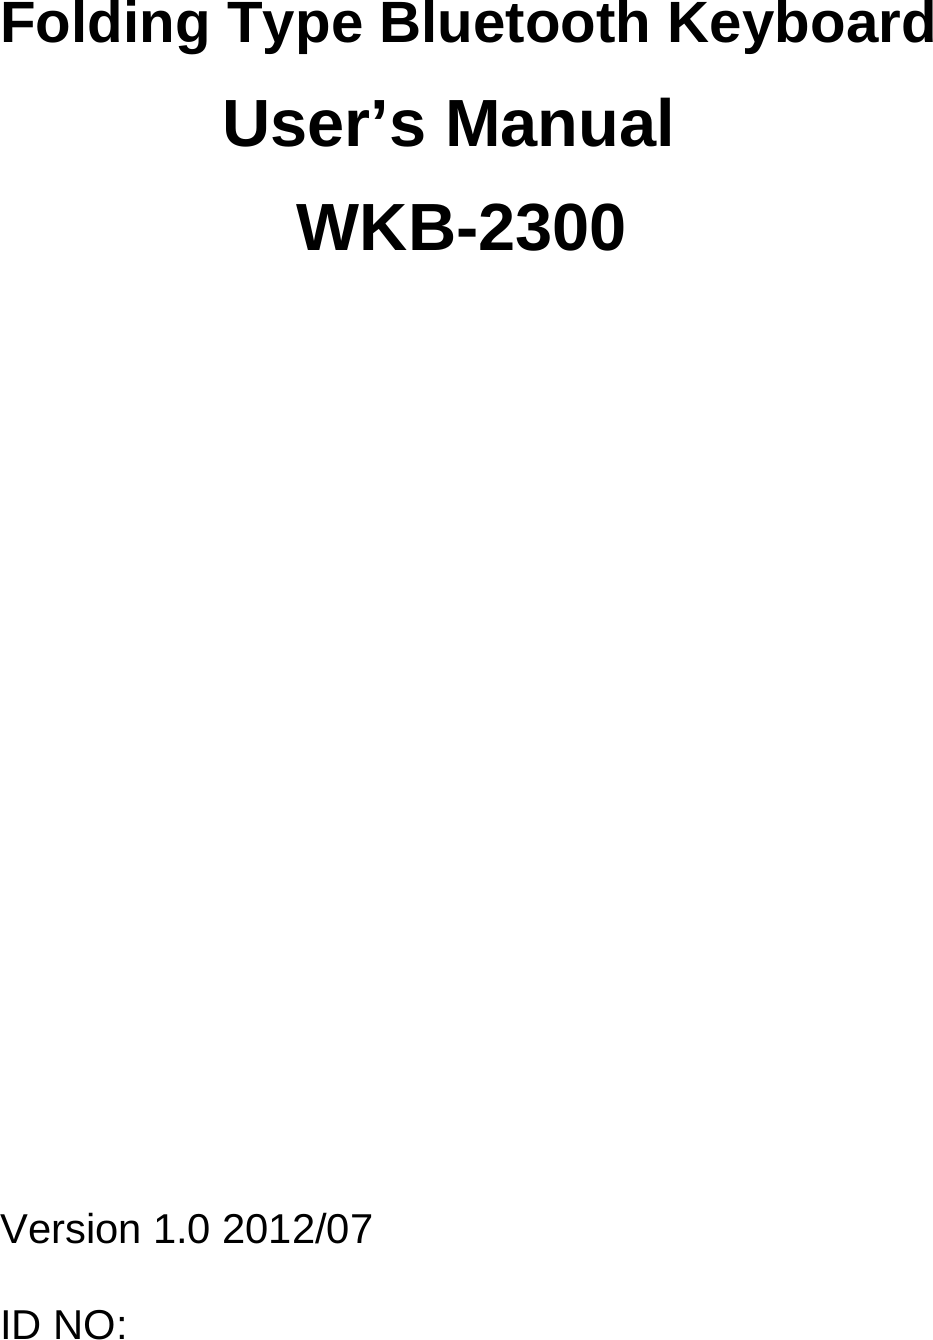 Folding Type Bluetooth Keyboard              User’s Manual                 WKB-2300        Version 1.0 2012/07  ID NO: 